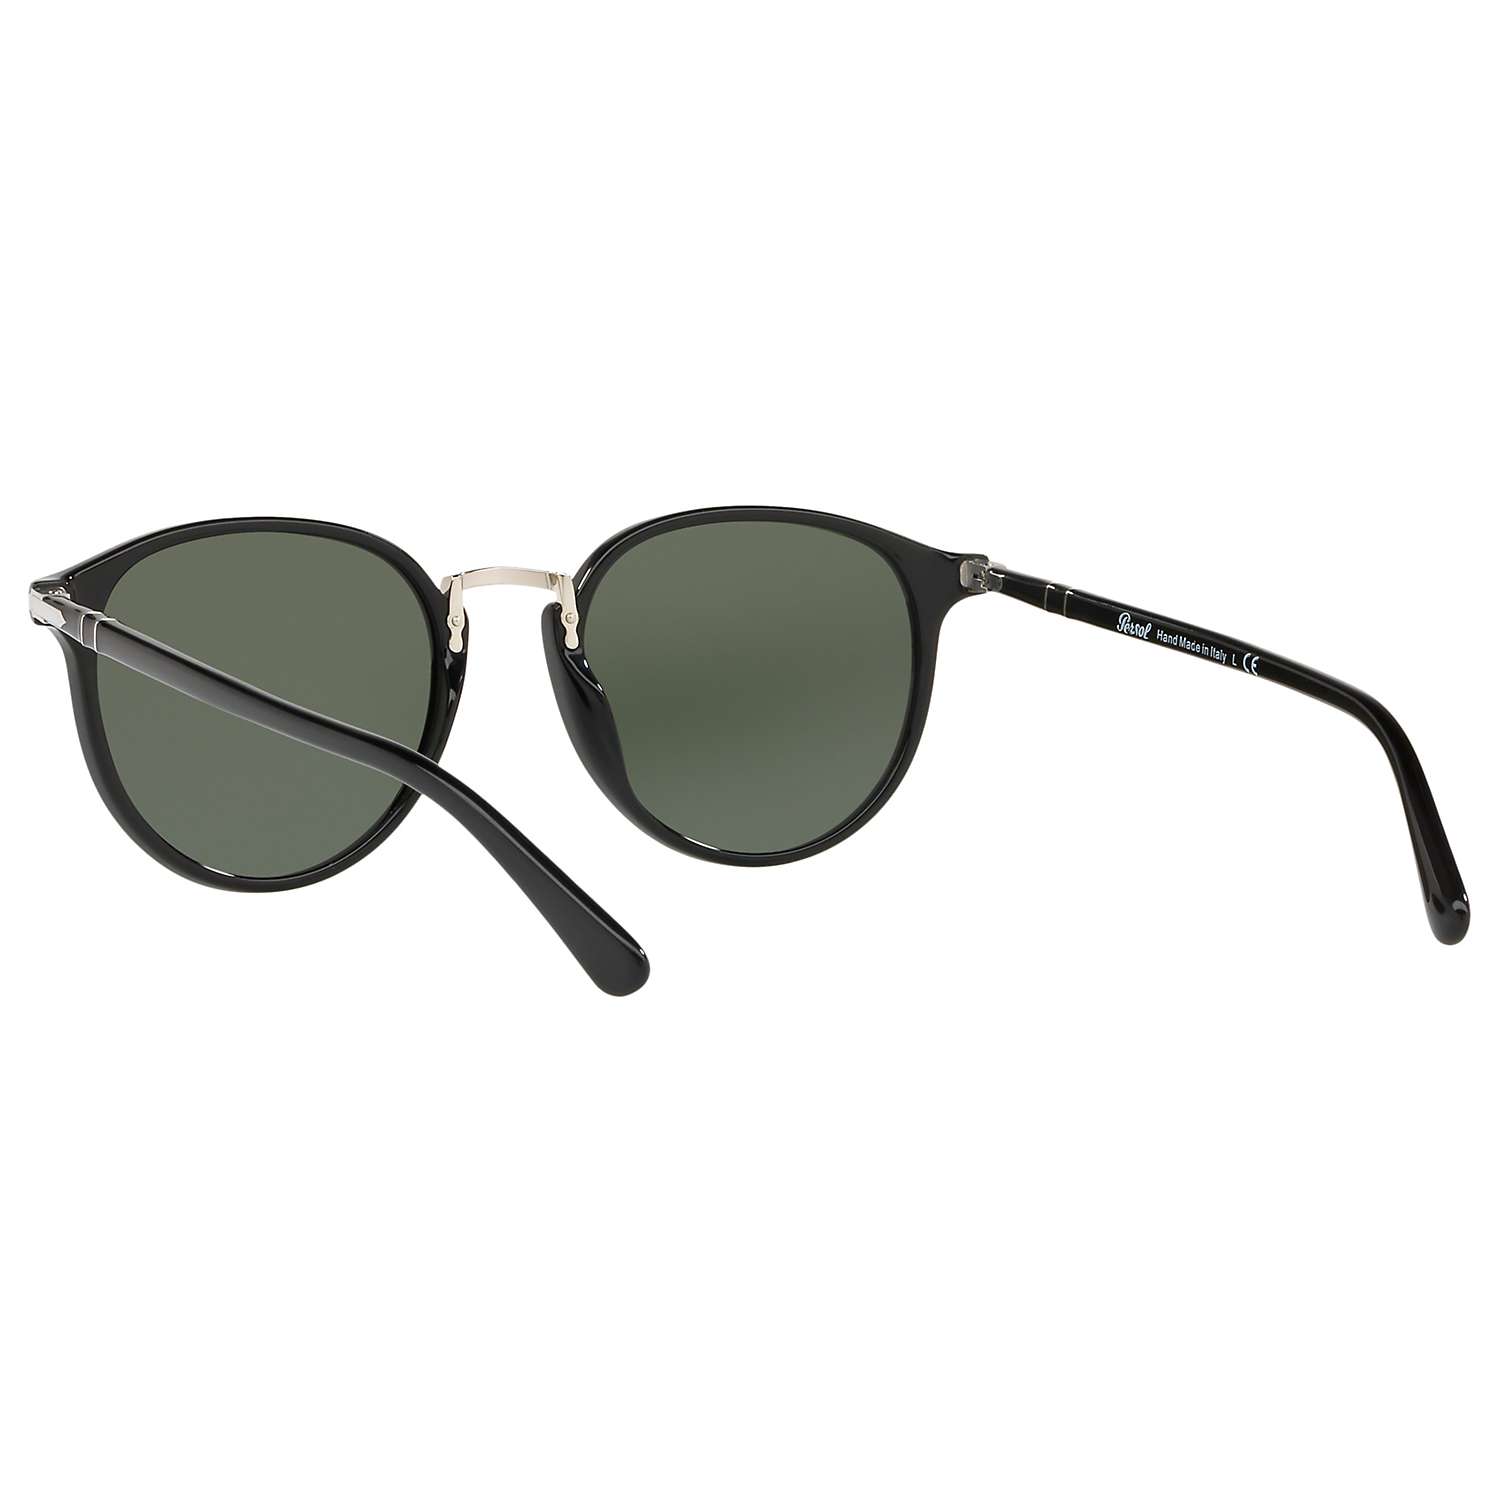 Buy Persol PO3210S Men's Oval Sunglasses, Black/Green Online at johnlewis.com